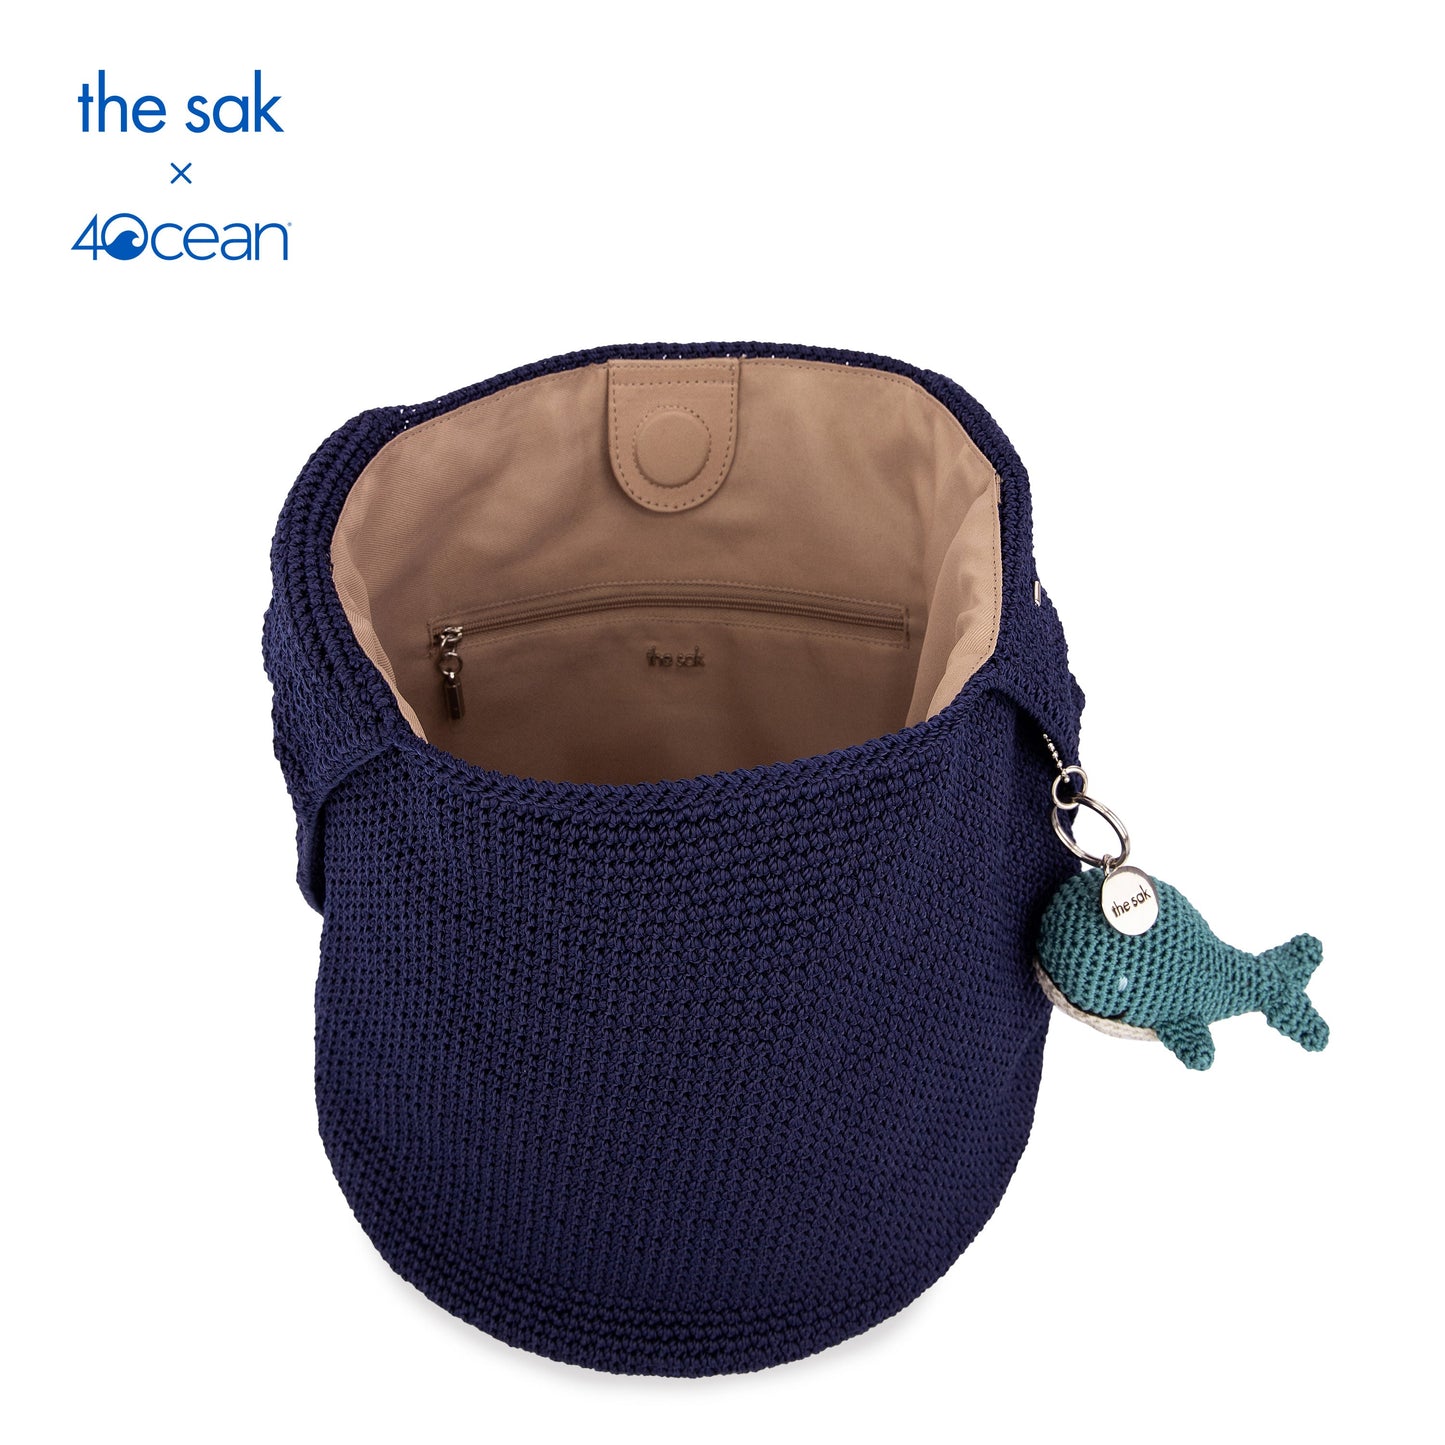 Sakroots x 4ocean Crochet Hobo Bag with Critter Keychain